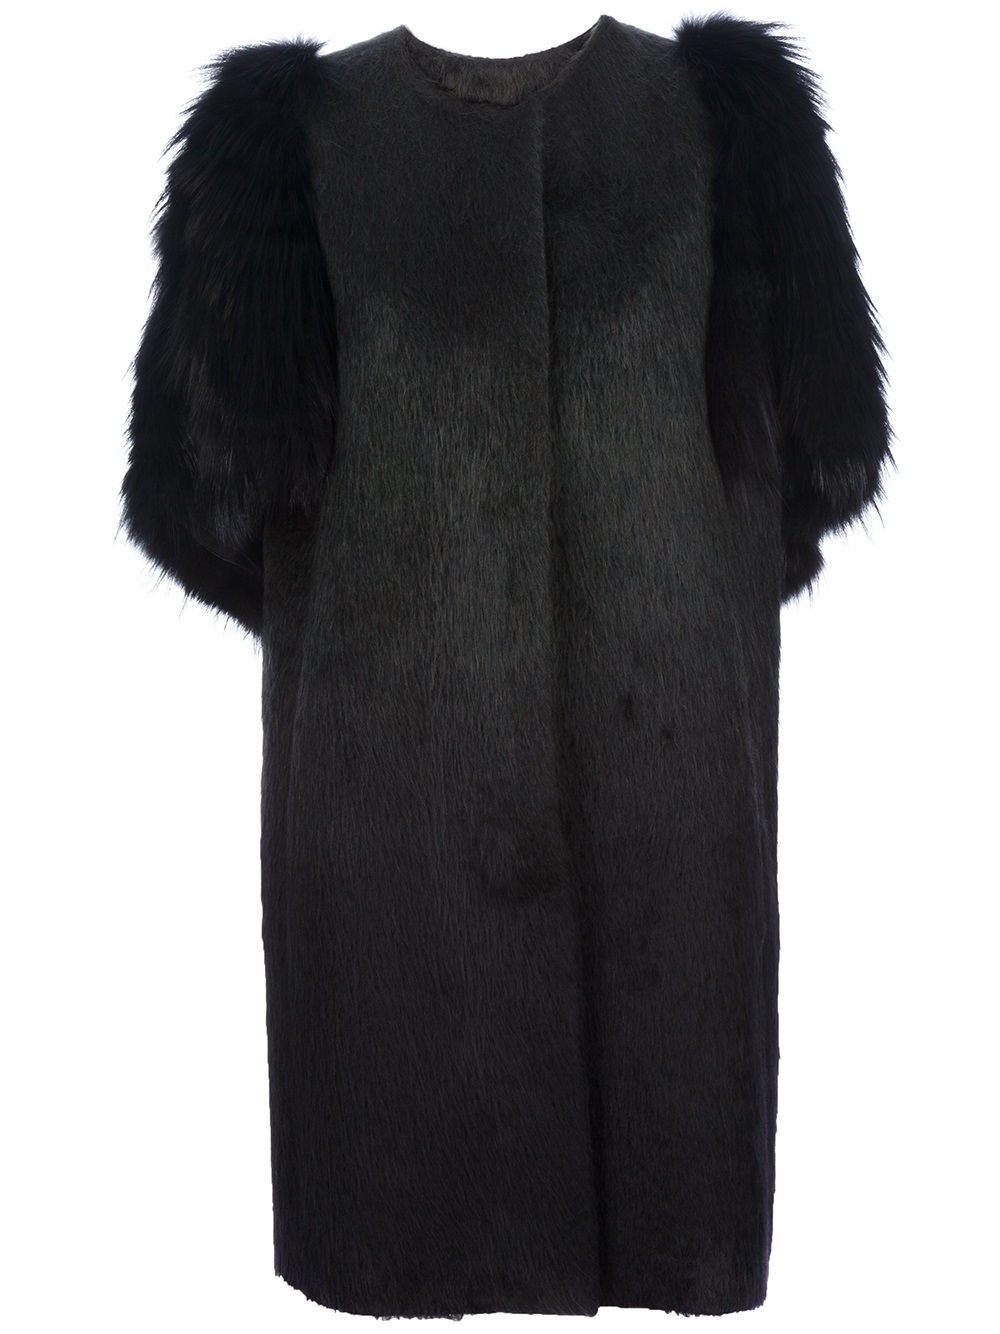 Fendi Fur Panelled Coat in Black - Lyst